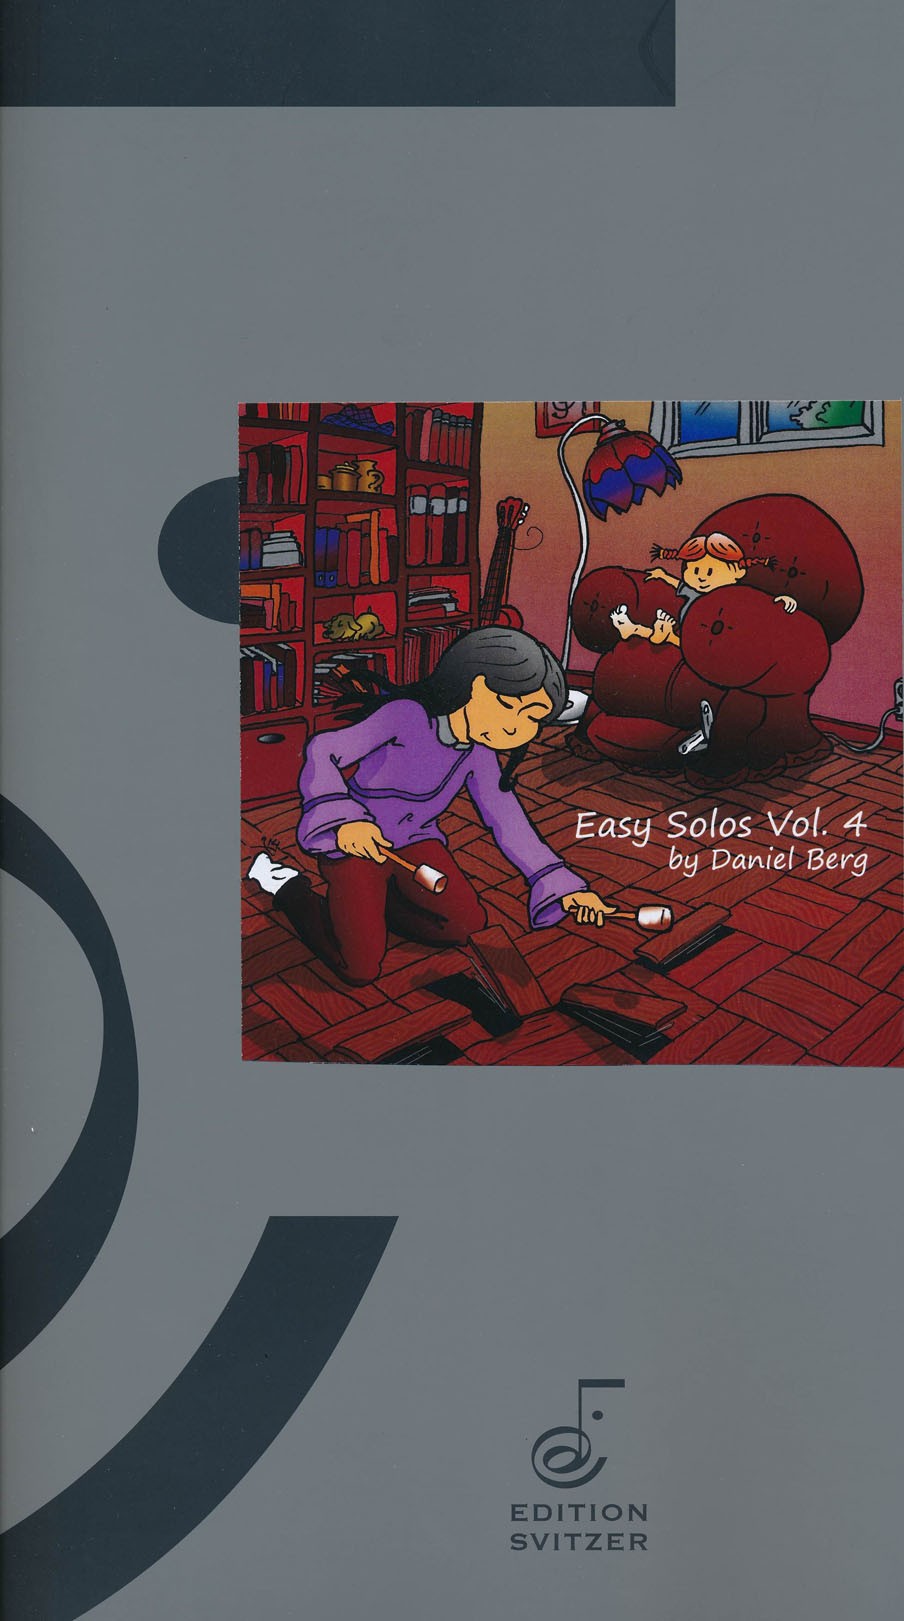 Easy Solos Vol. 4 by Daniel Berg